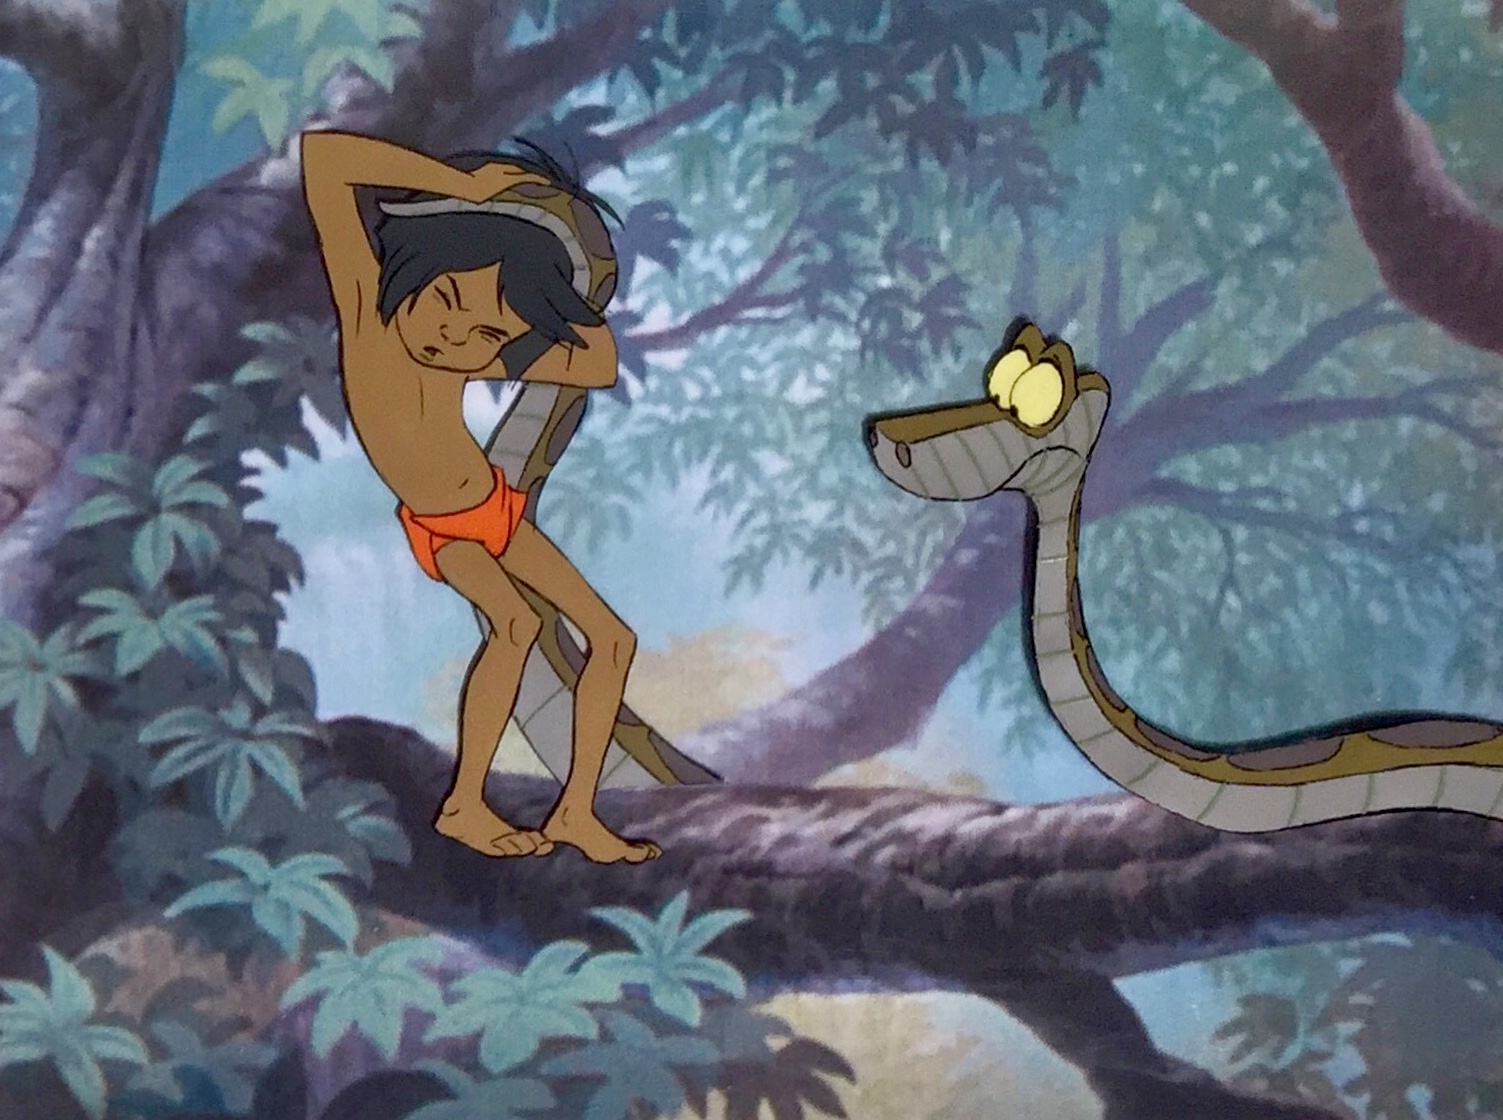 The Jungle Book Mowgli And Kaa - Image to u